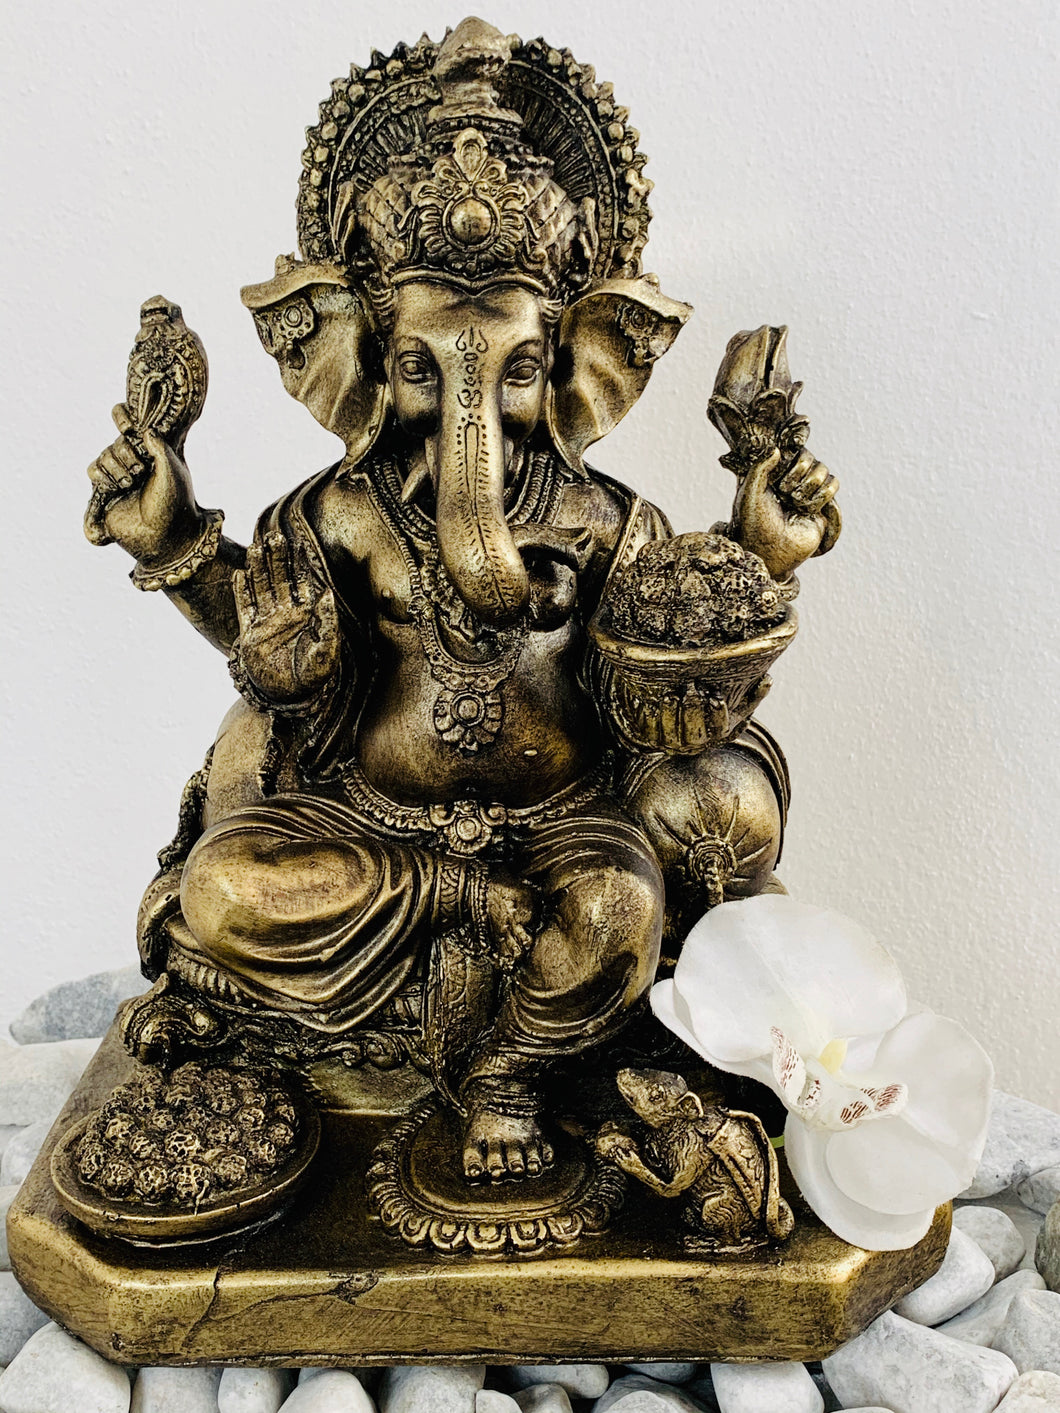 34cm Ganesha